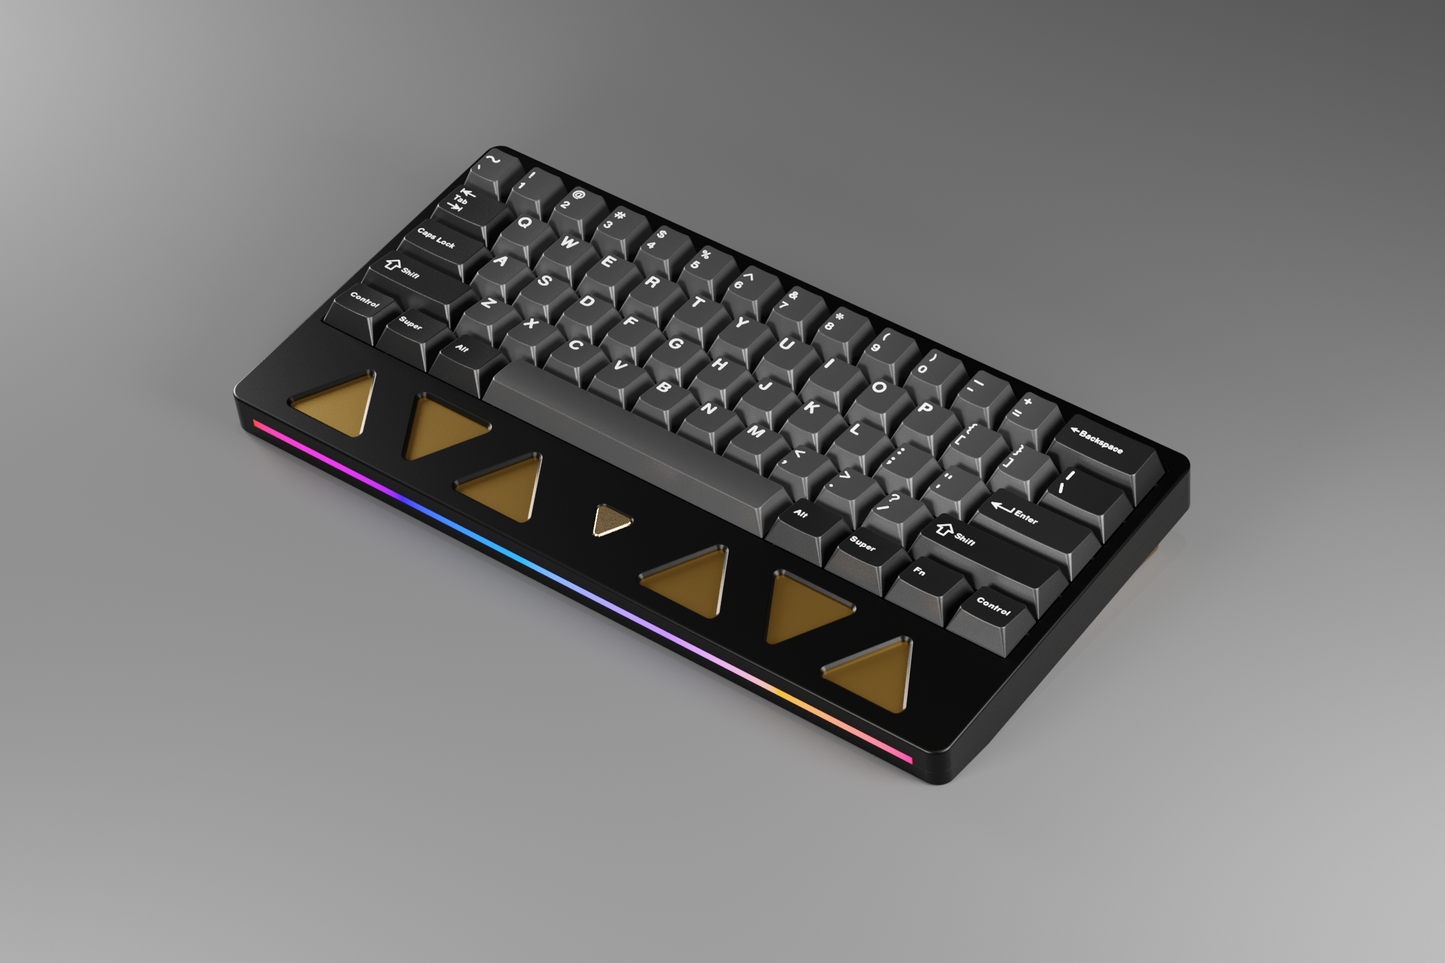 [Group-Buy] NotfromSam Trigon Anodized Edition Keyboard Kit